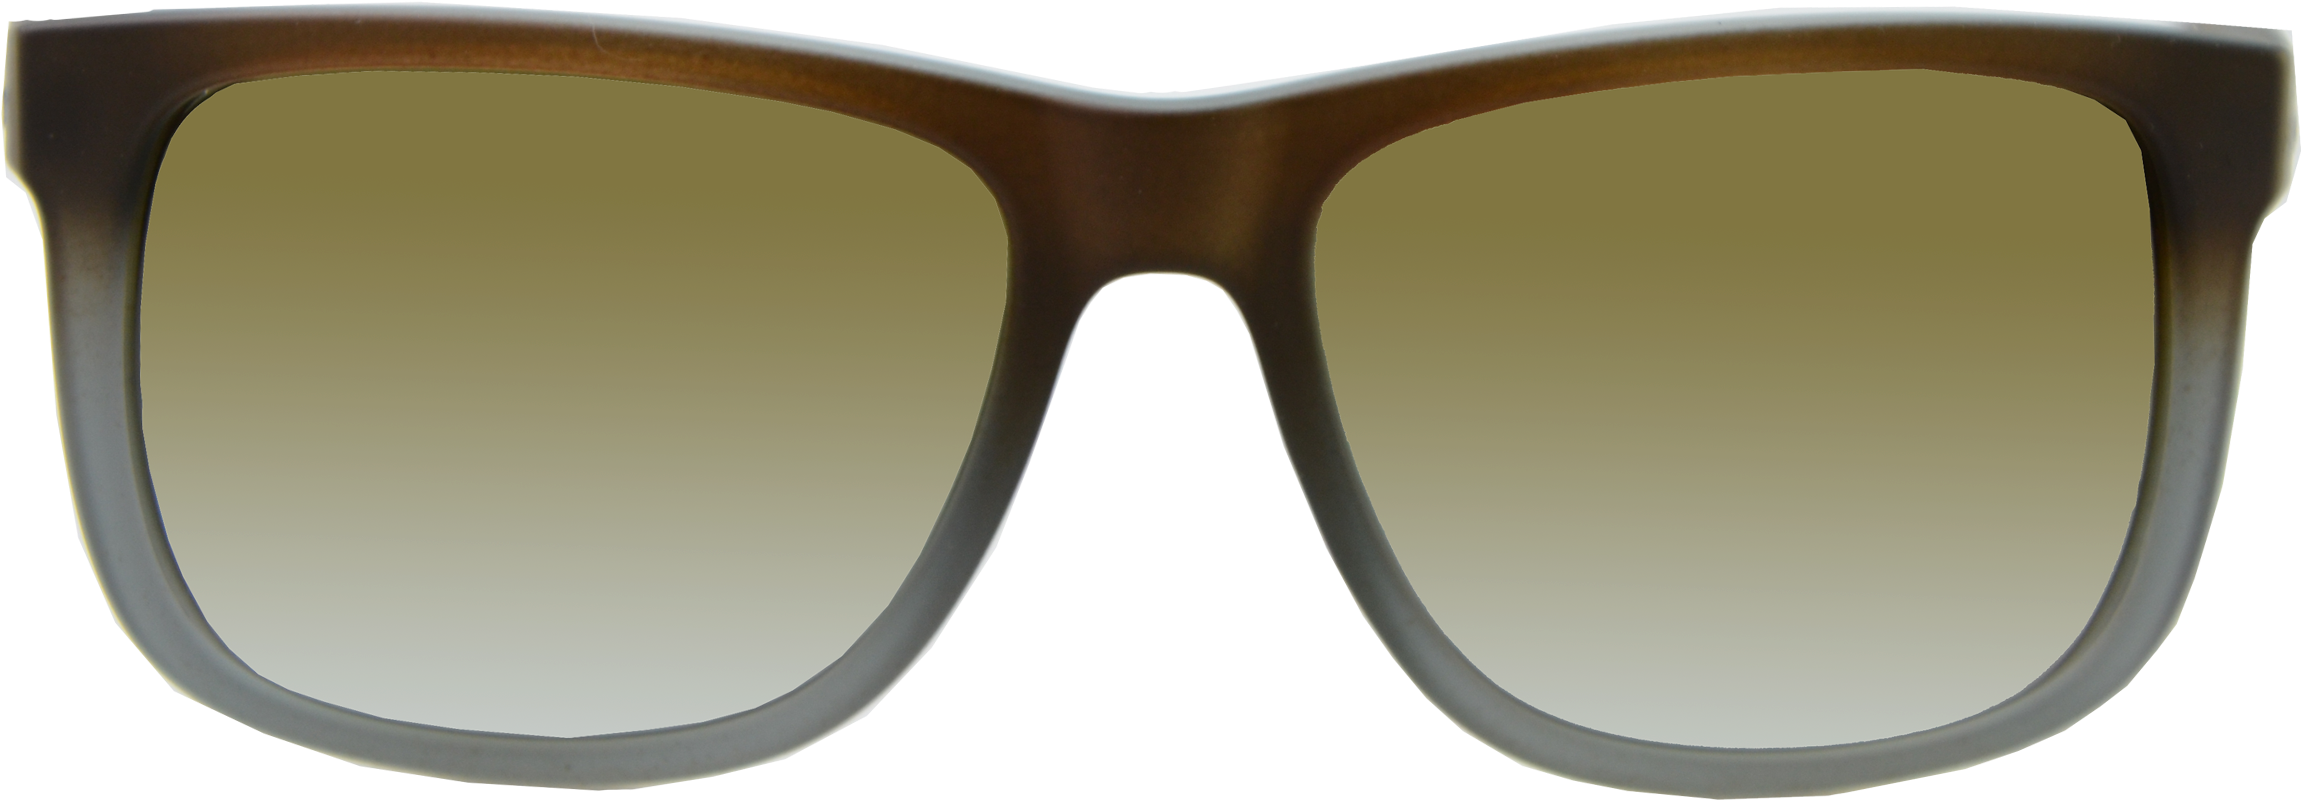 Mens Sunglasses Frame PNG Images HD